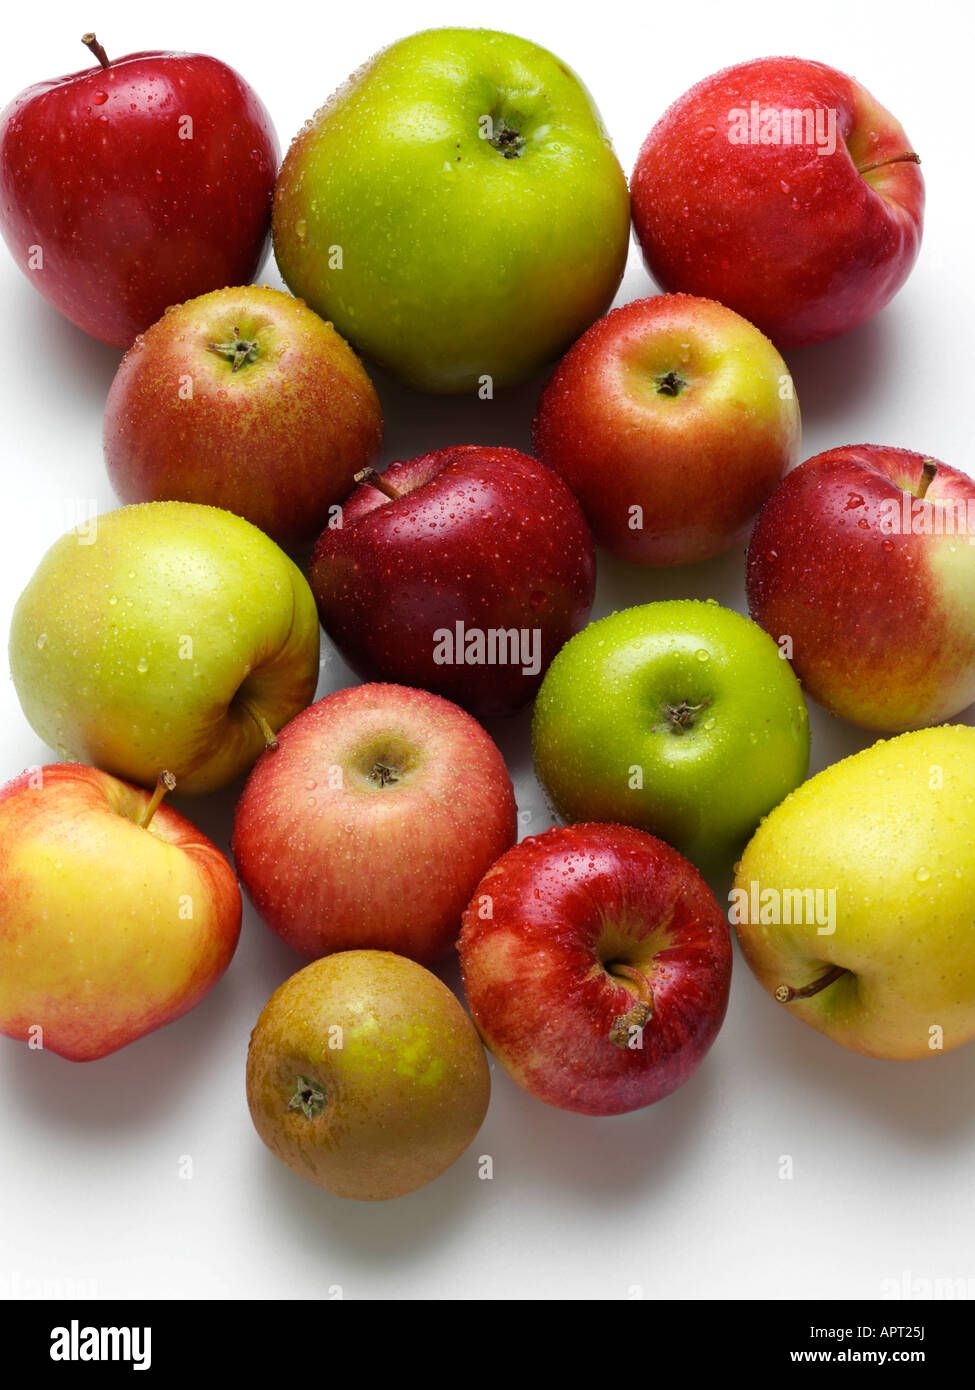 https://c8.alamy.com/comp/APT25J/fourteen-different-varieties-of-apples-editorial-food-APT25J.jpg